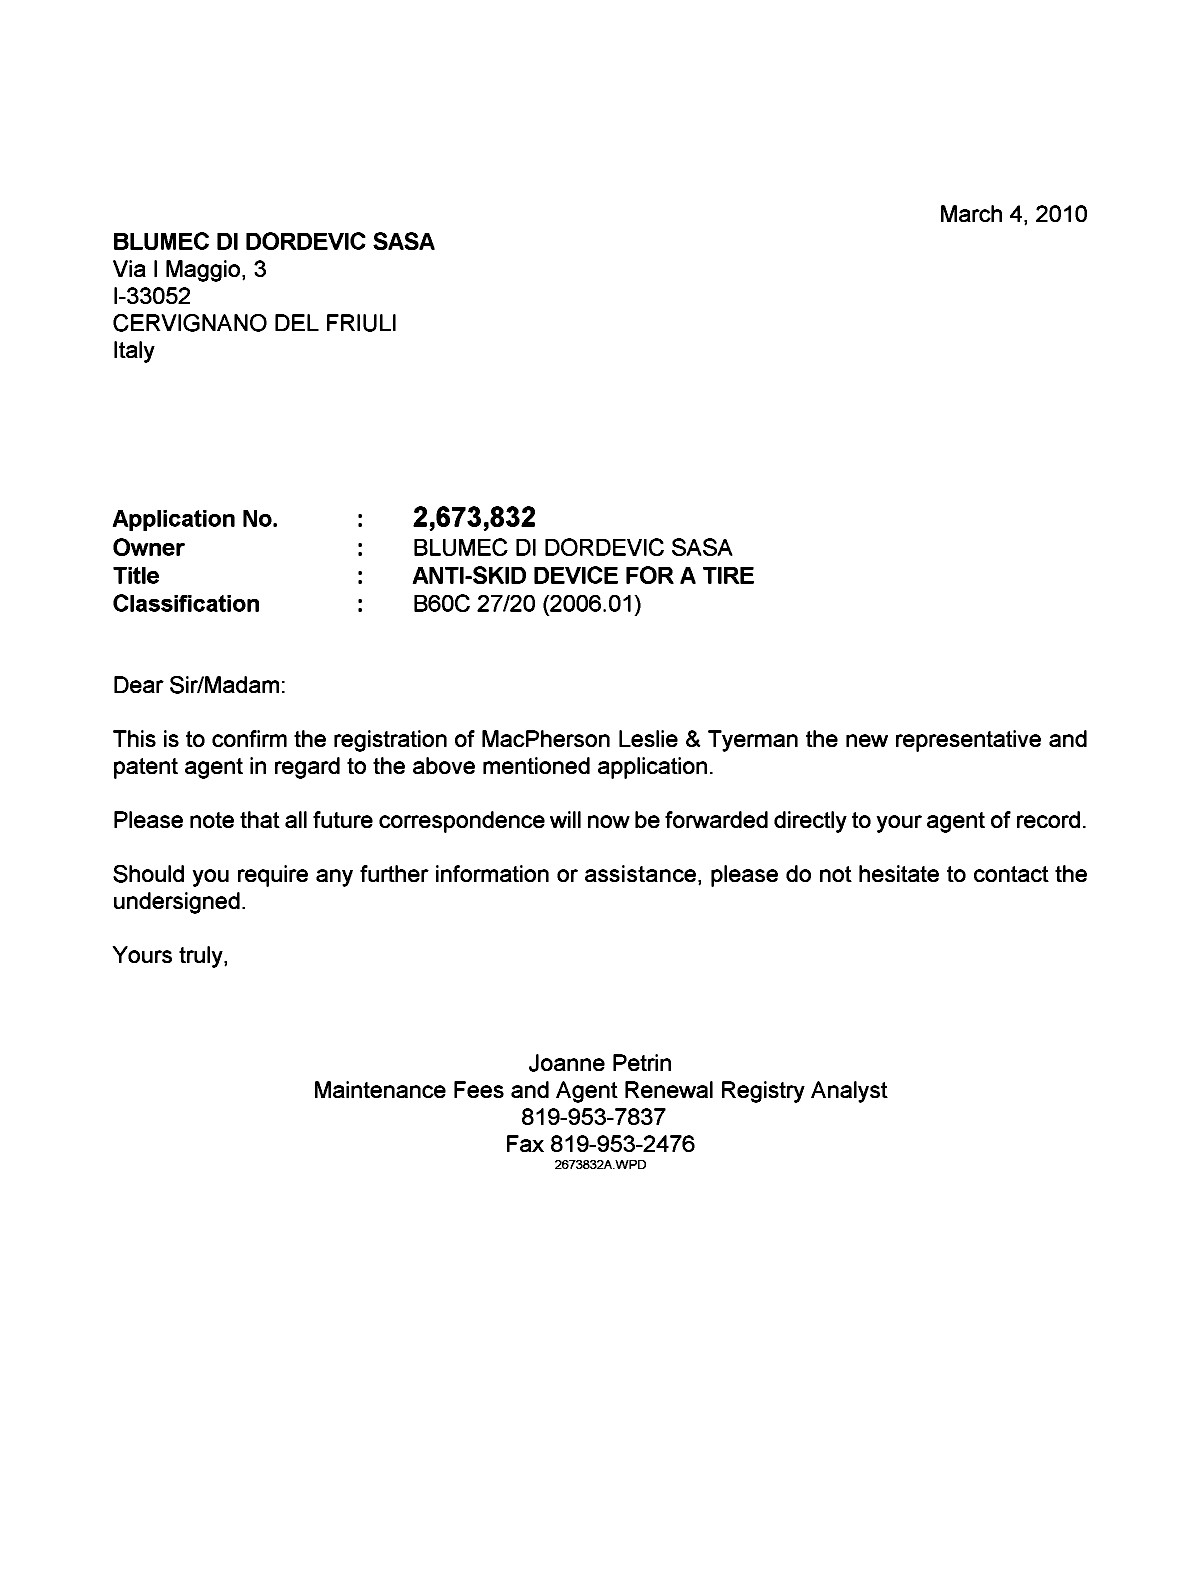 Canadian Patent Document 2673832. Correspondence 20100304. Image 1 of 1